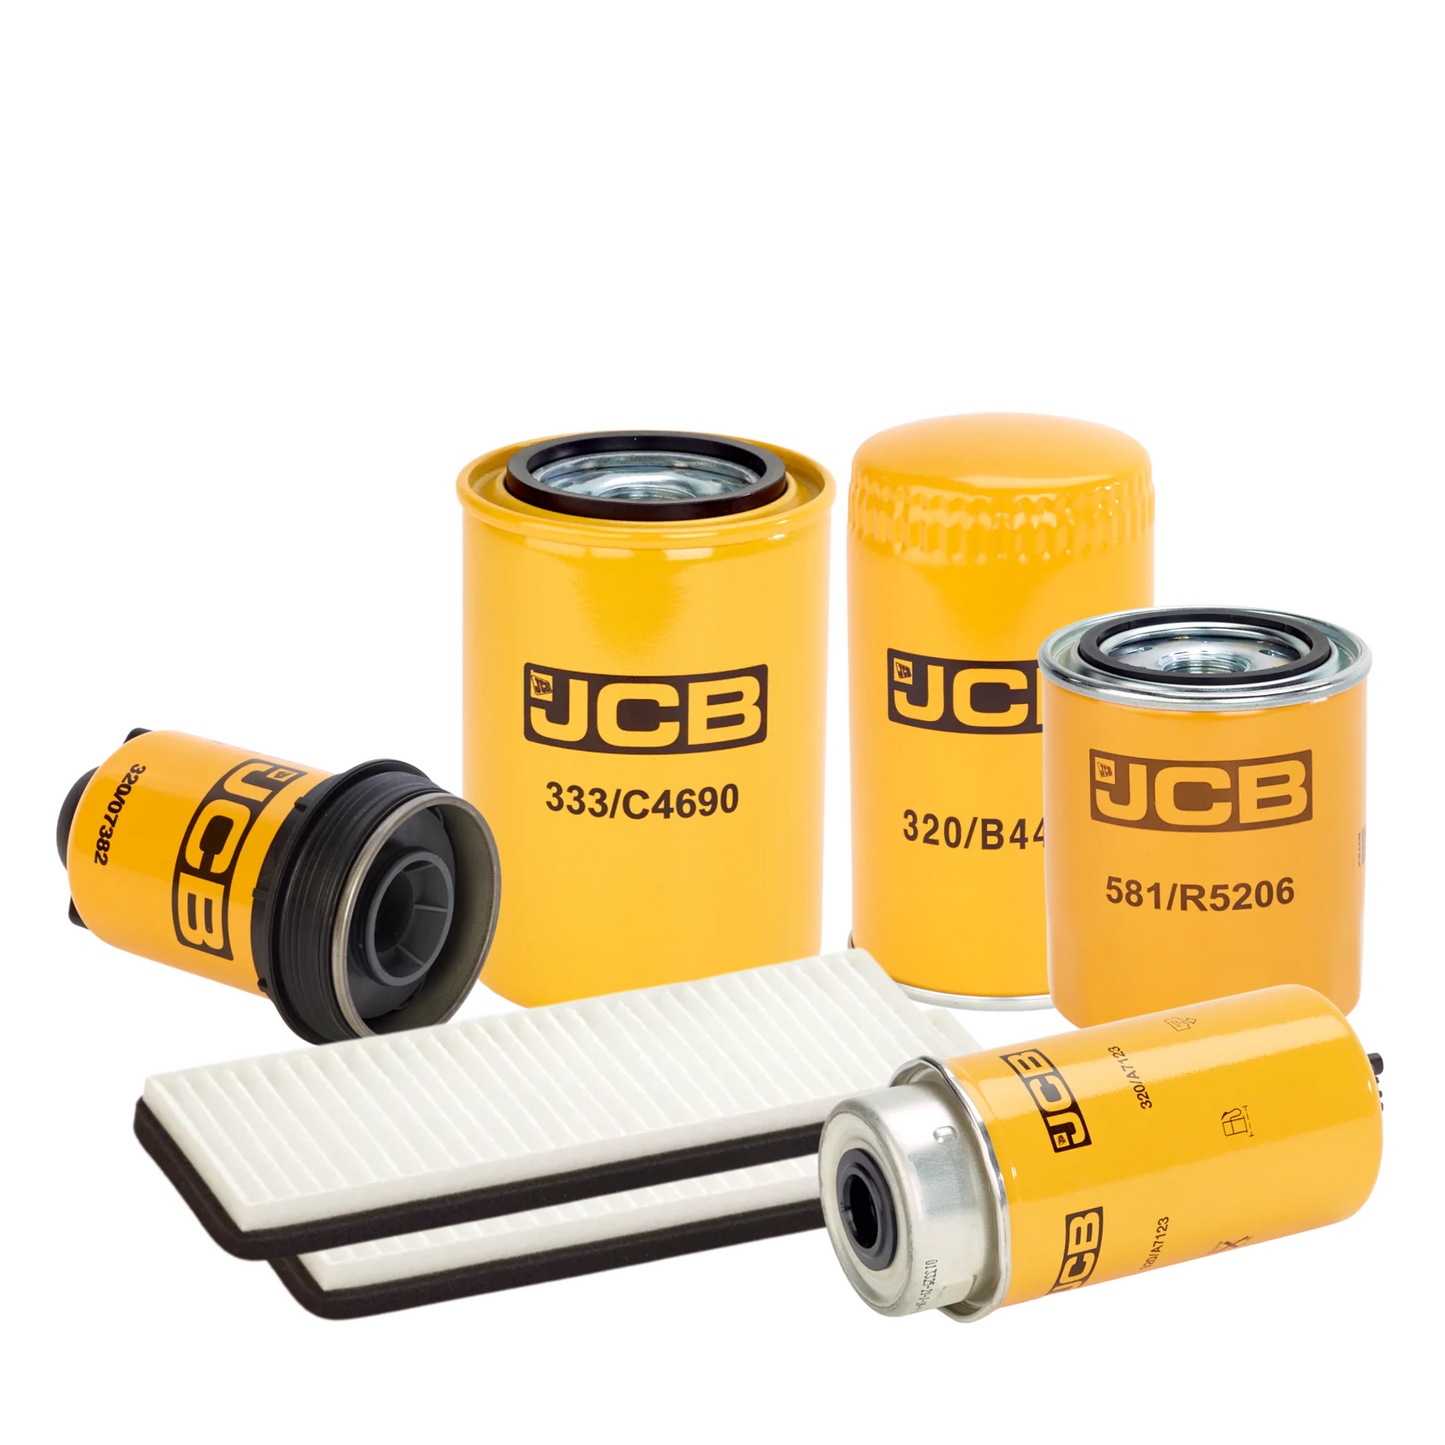 JCB 531-70 4500 Hour Filter Service Kit